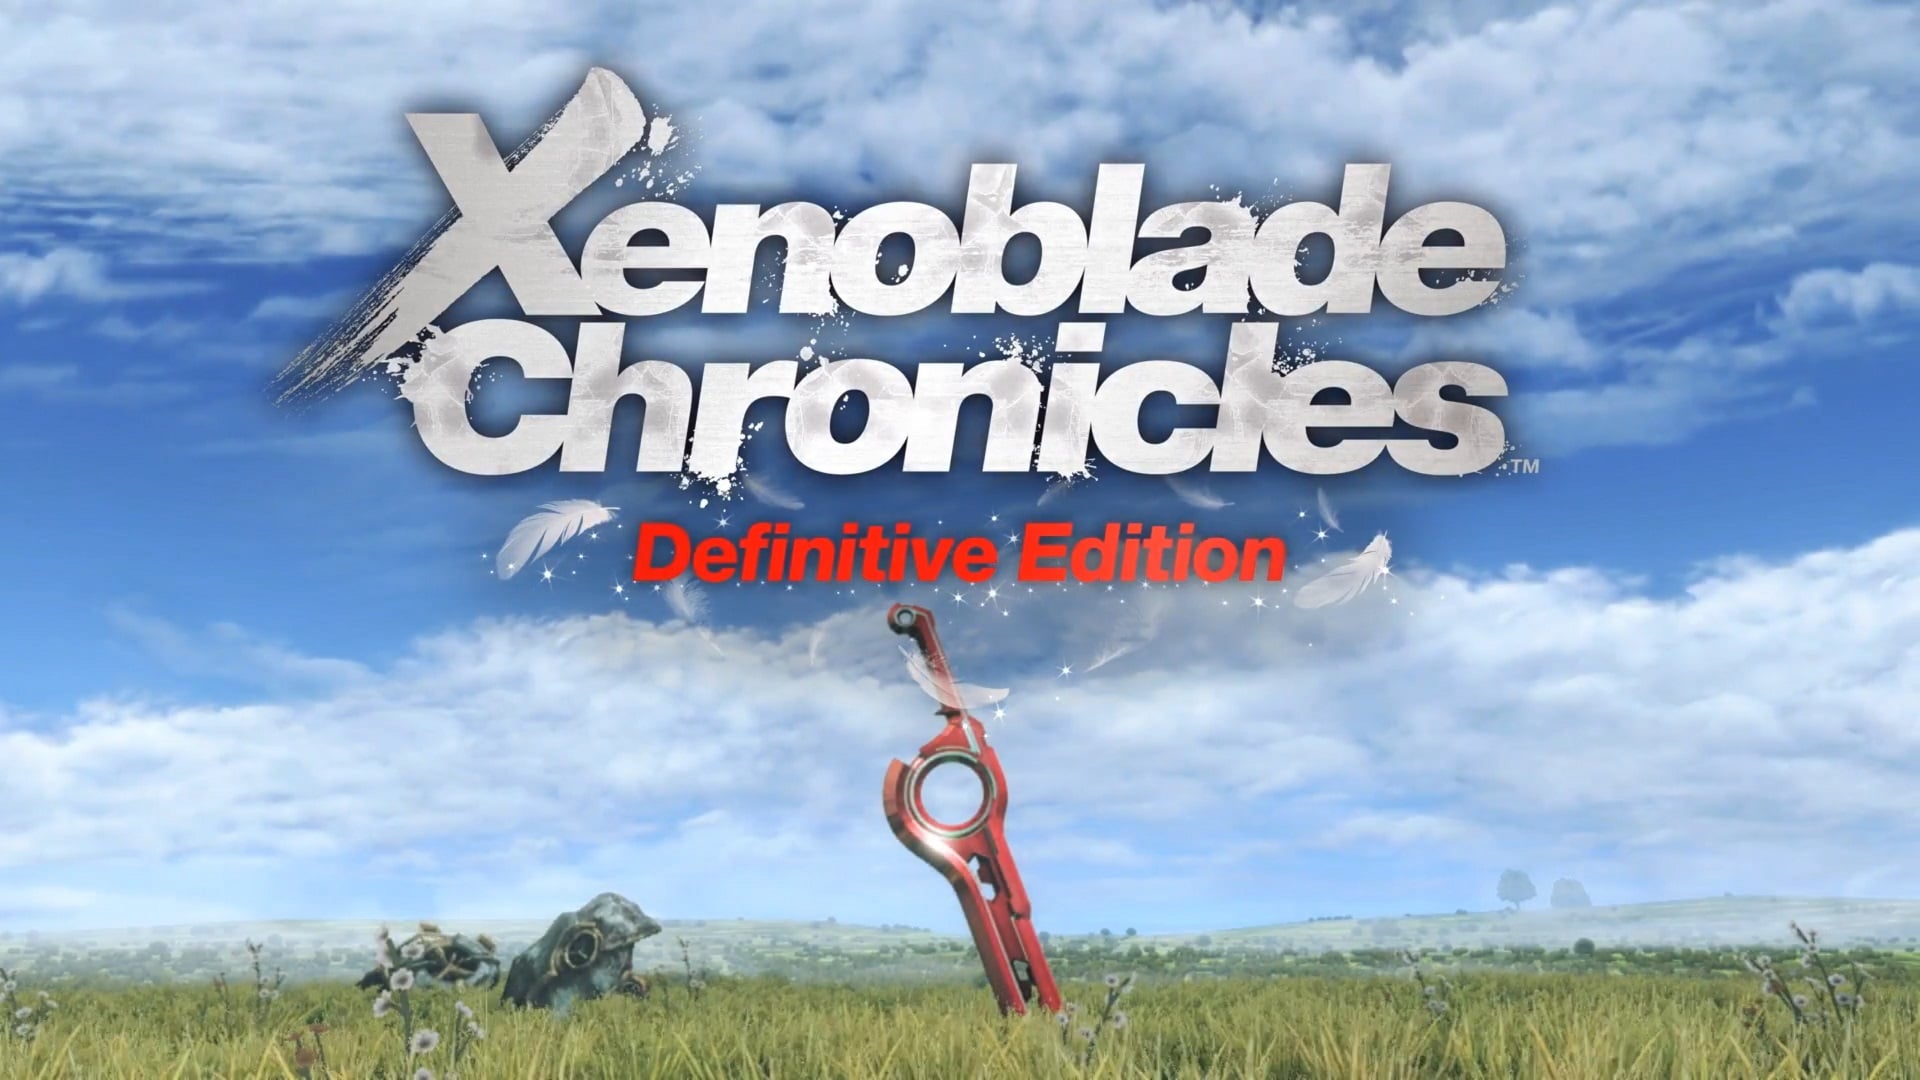 Xenoblade chronicles: definitive edition